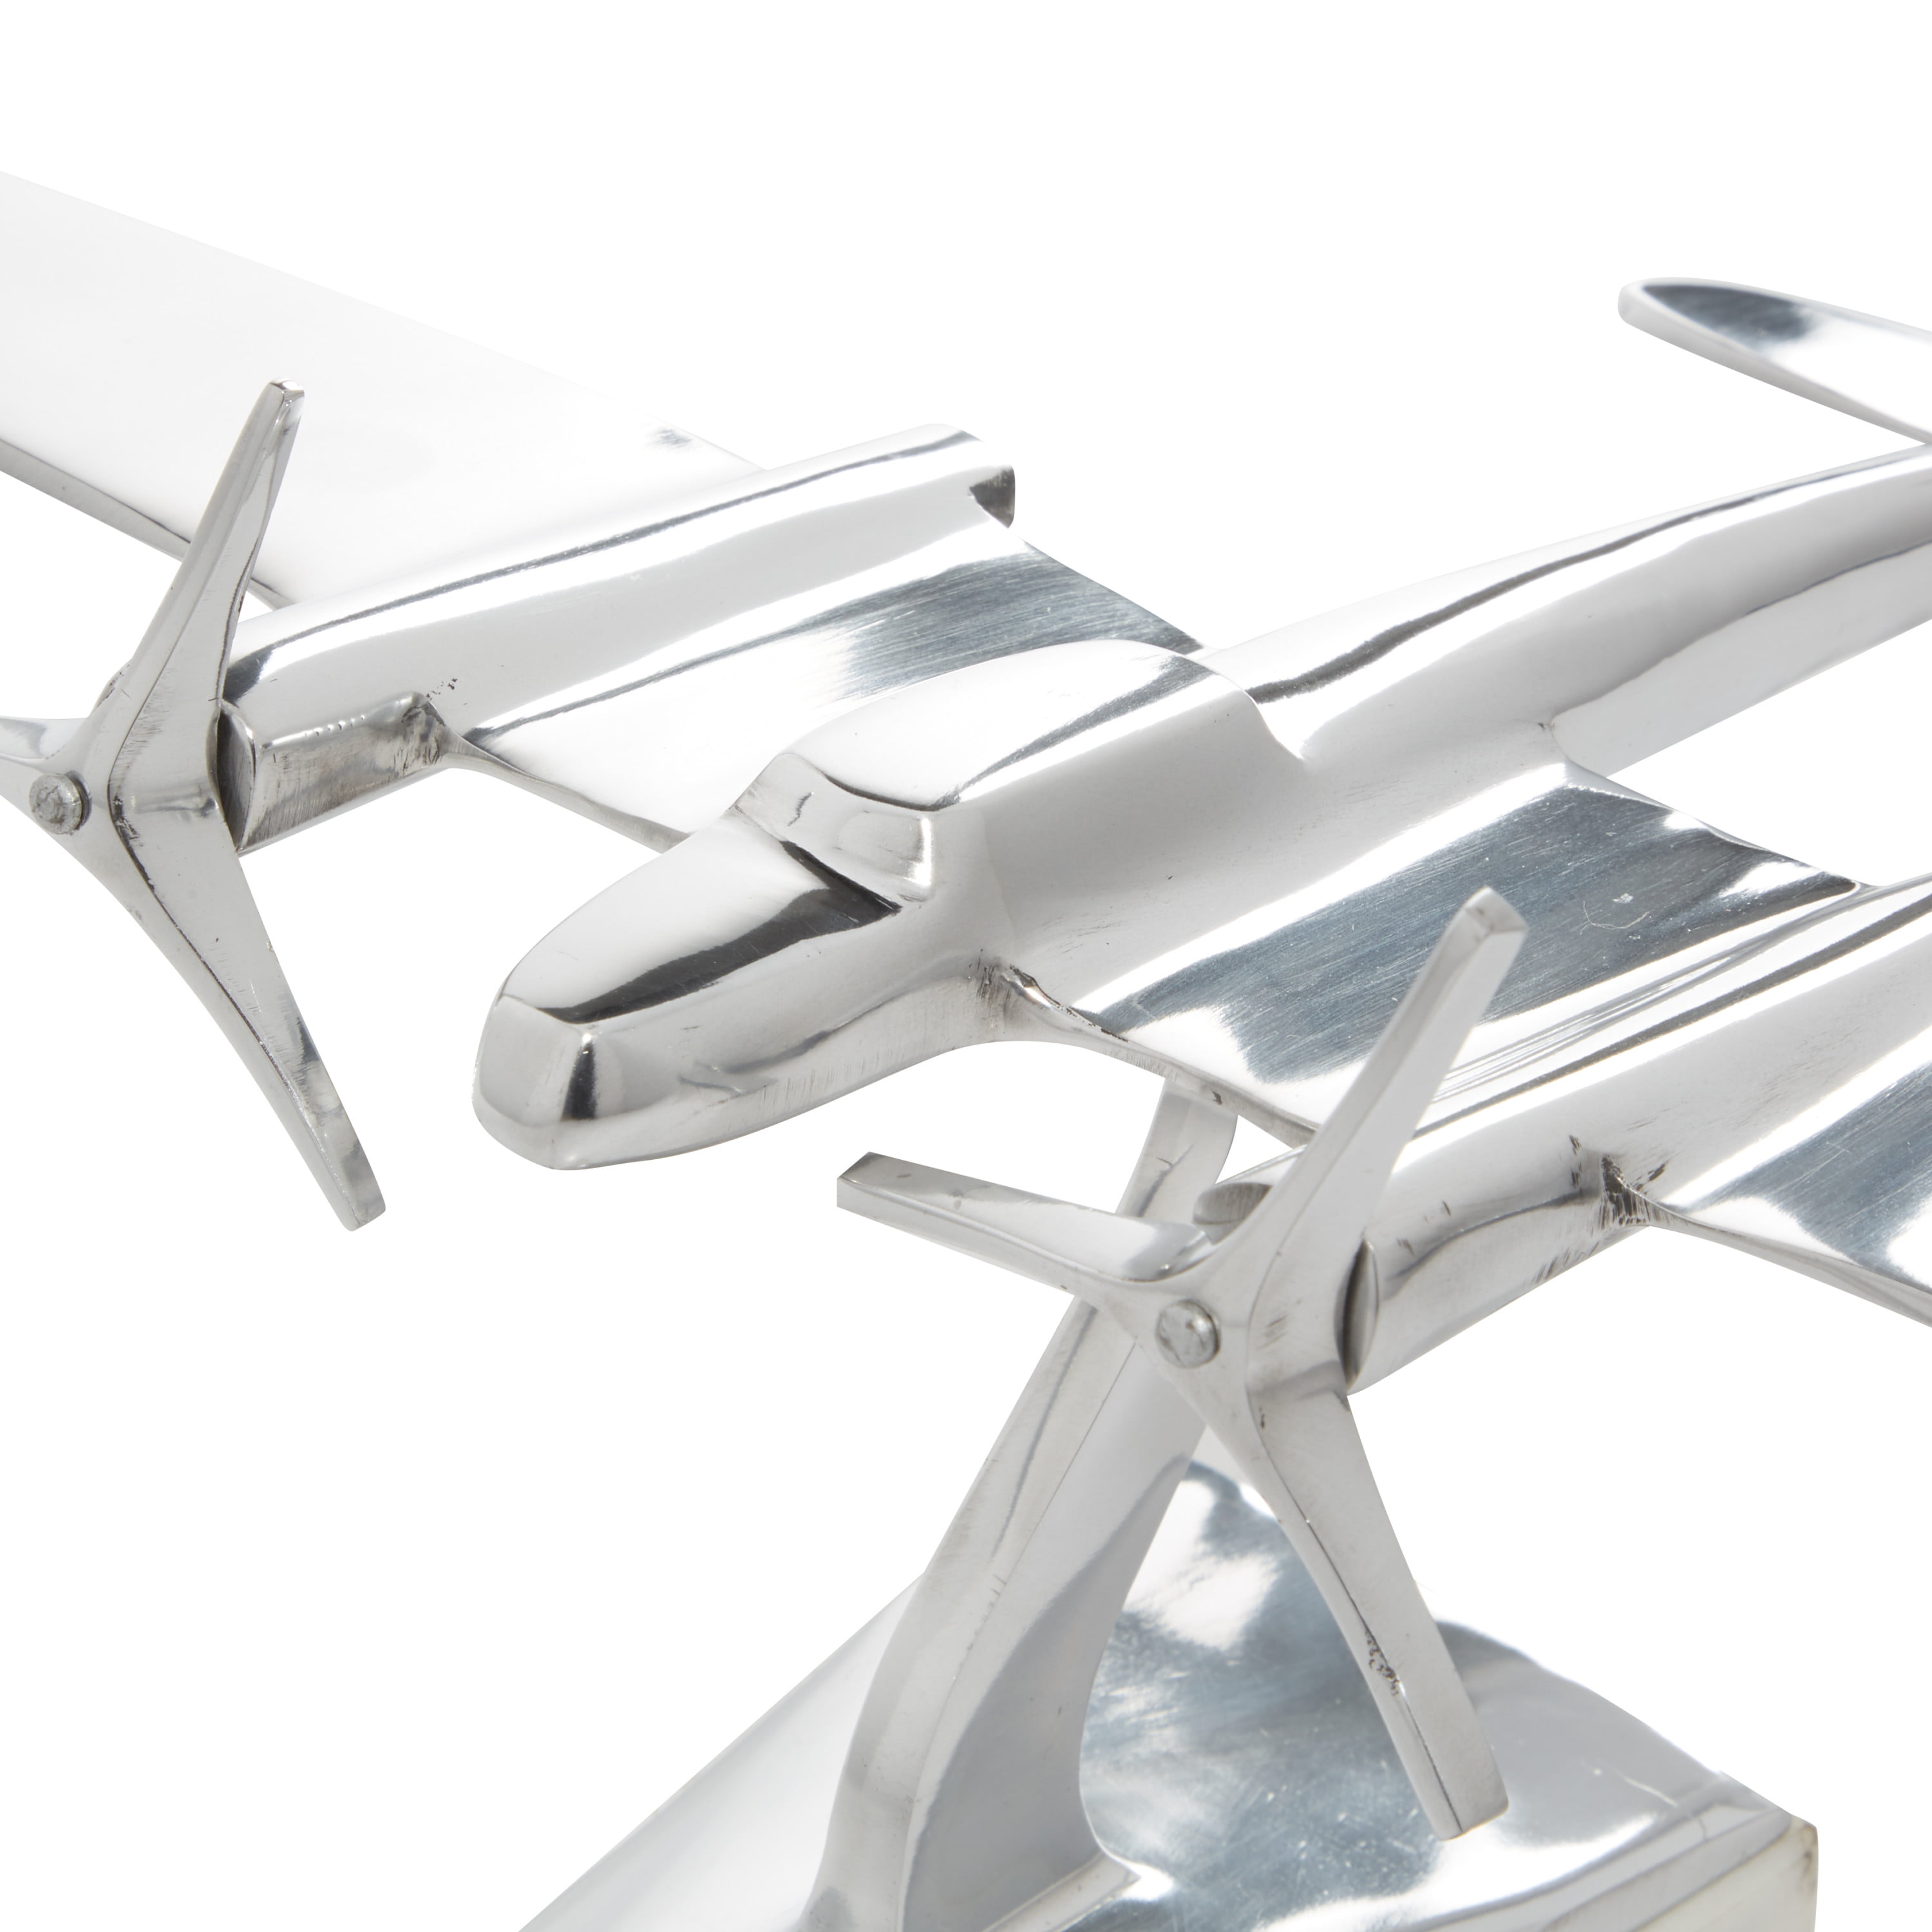 Avion polystyrène à hélice - display/présentoir 12 models x 4